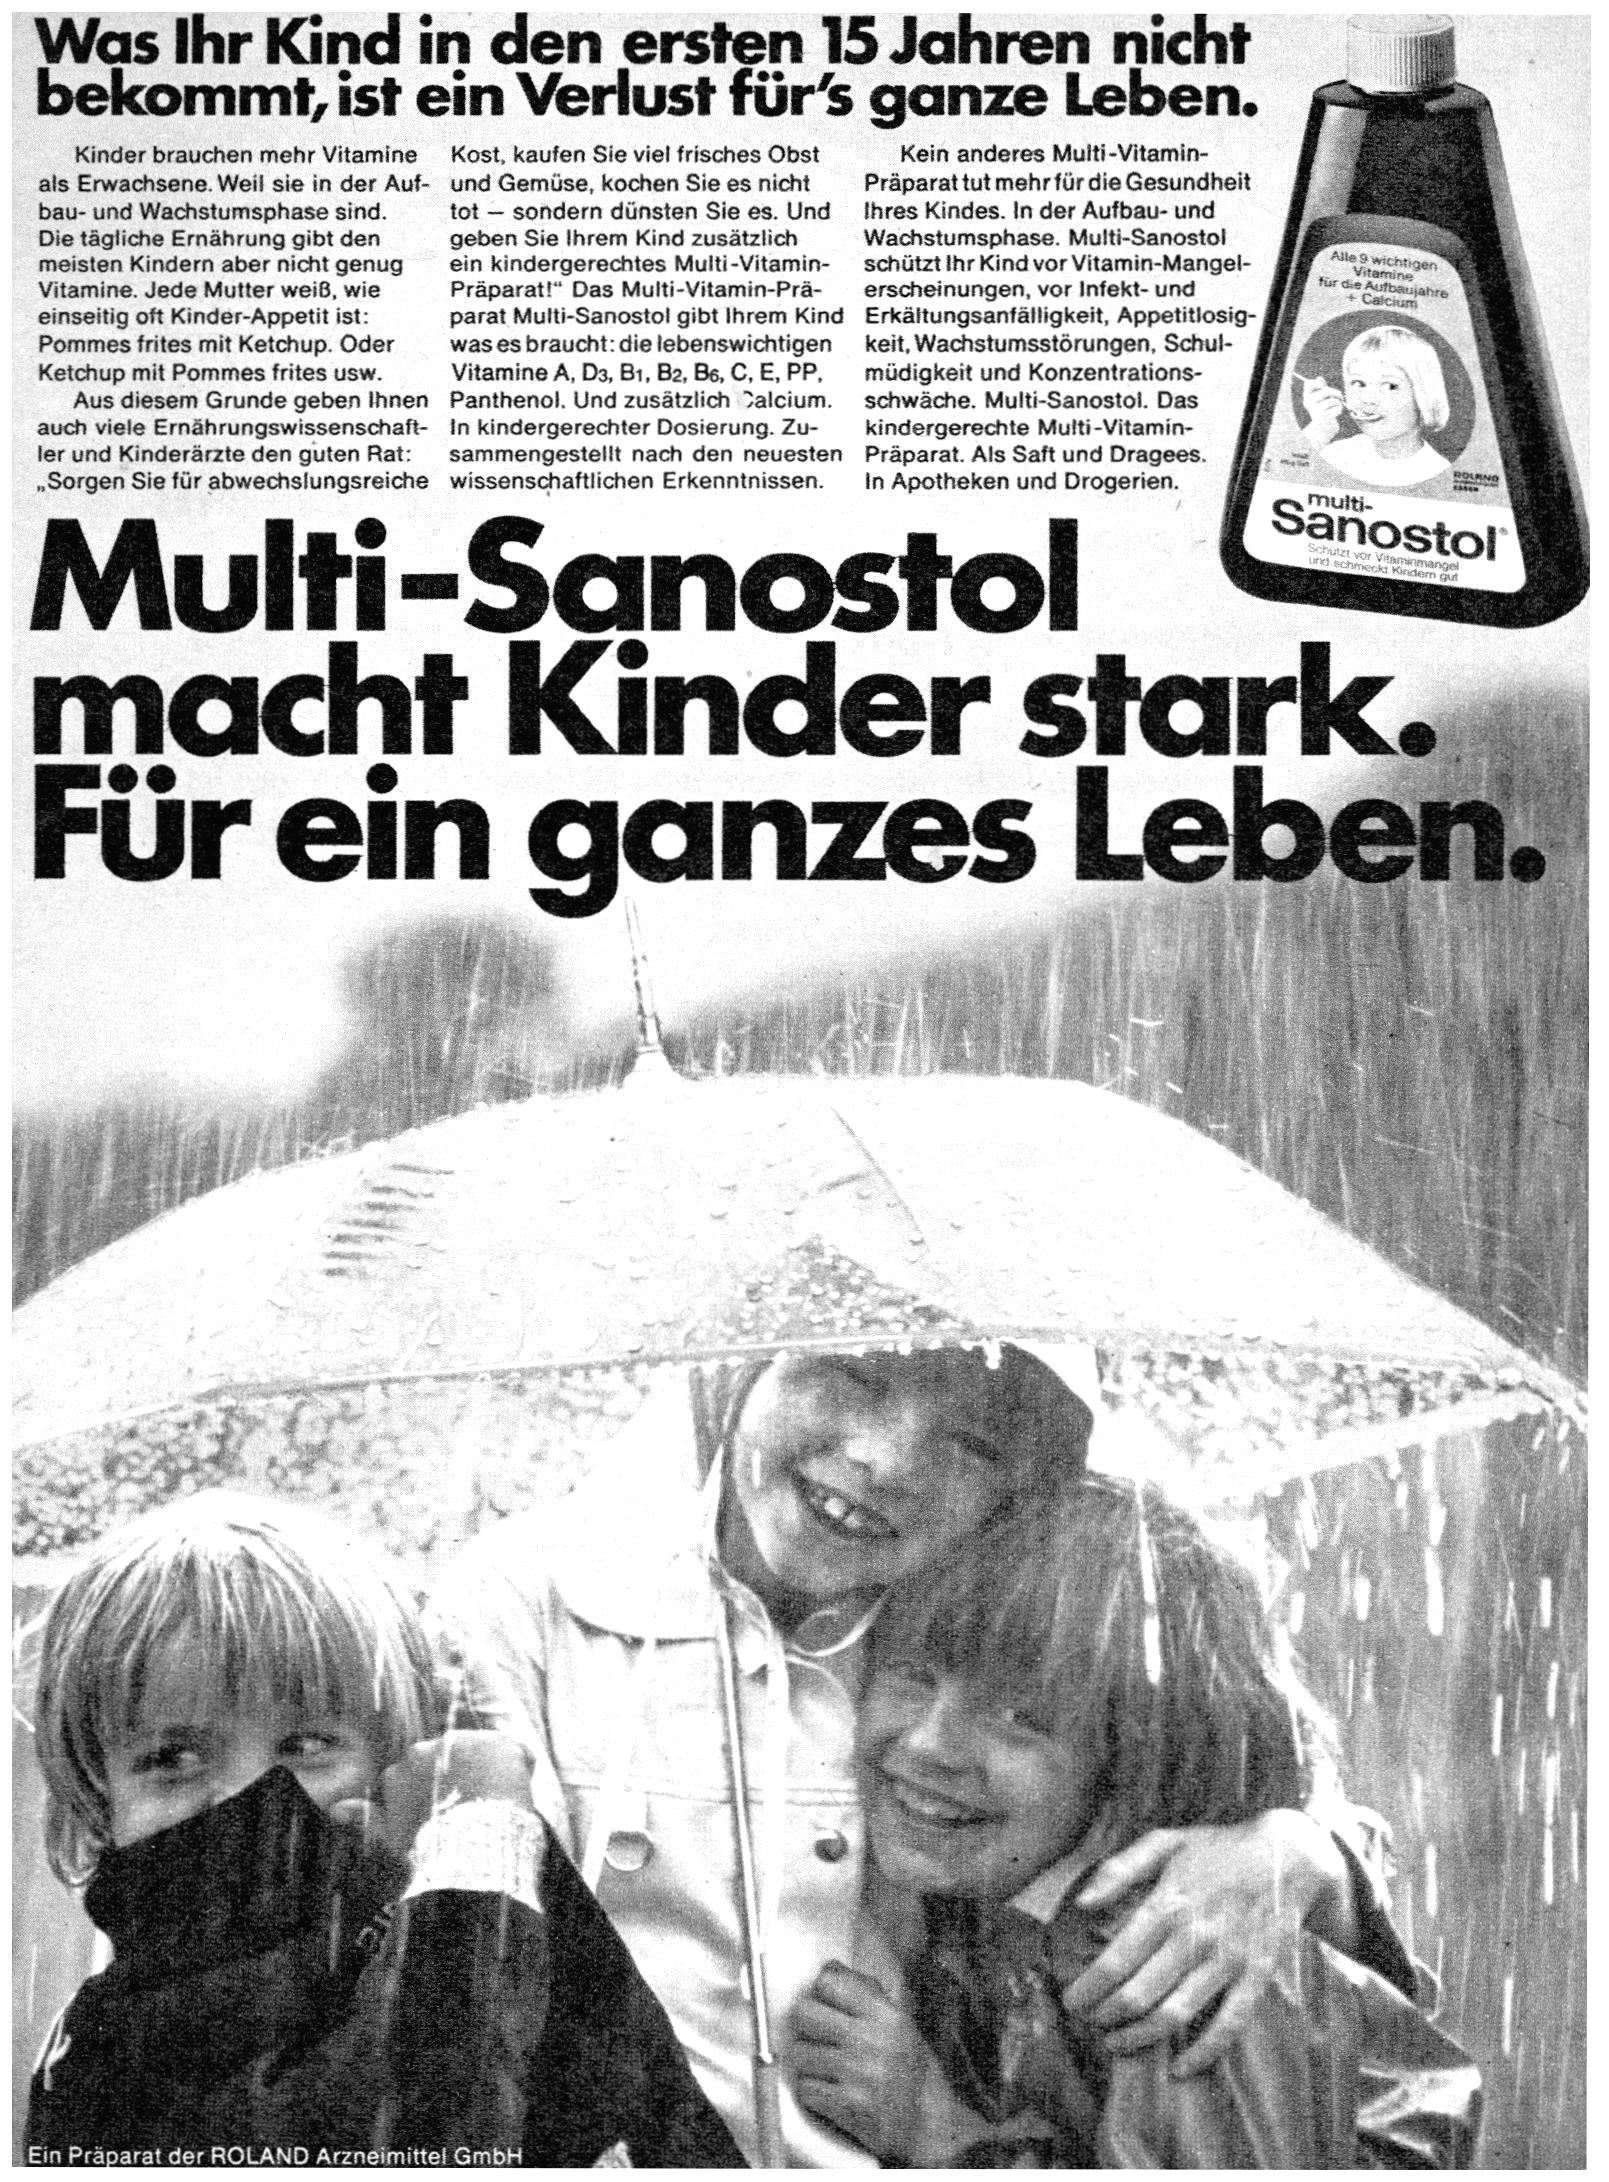 Sanostol 1975 0.jpg